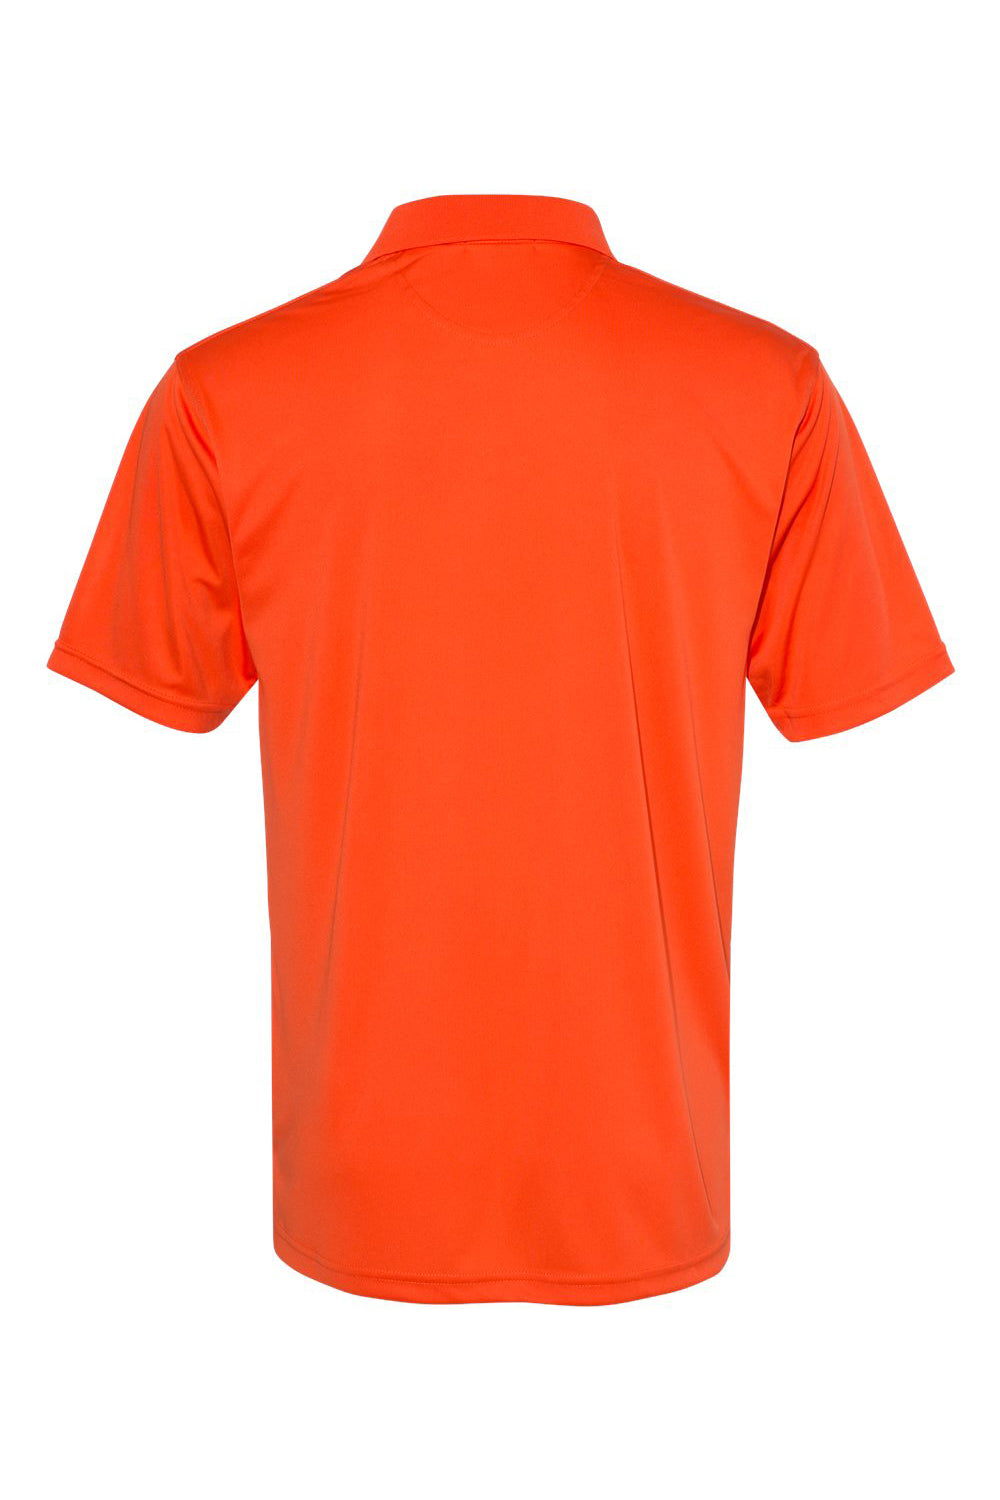 Sierra Pacific 0100 Mens Moisture Wicking Short Sleeve Polo Shirt Orange Flat Back